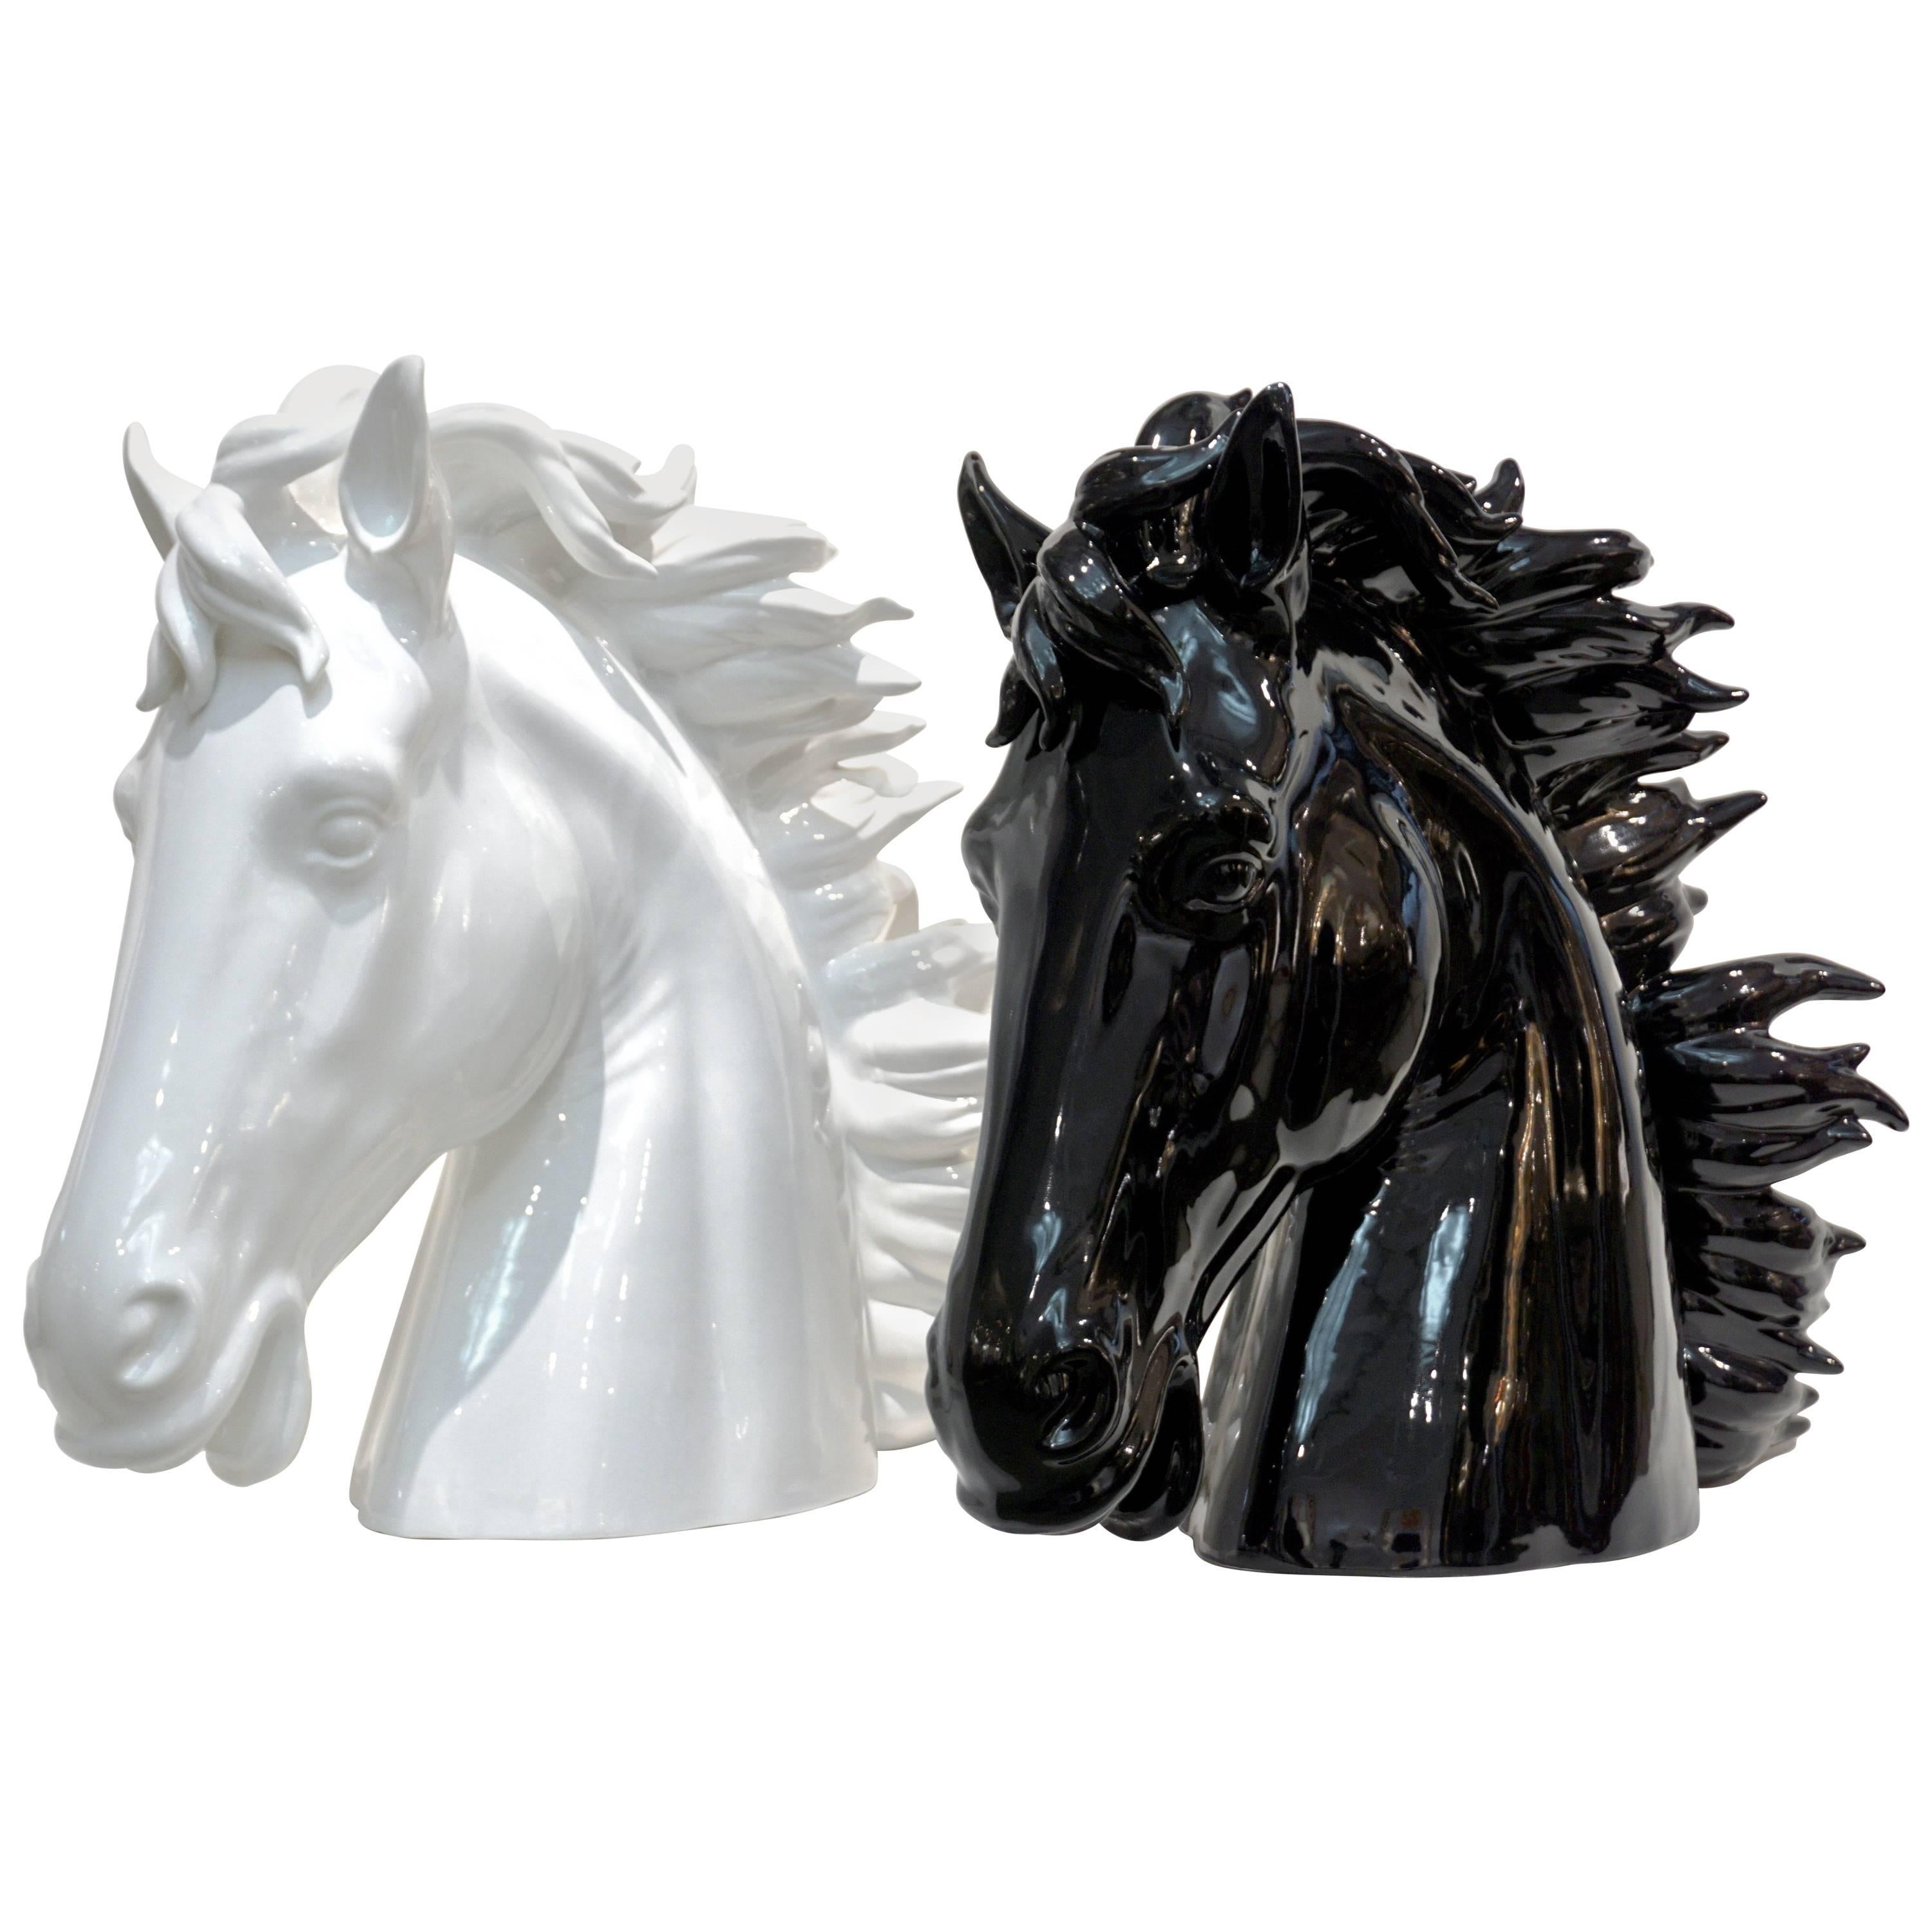 Modern Italian Design Oversized Black and White Ceramic Horse Head Sculptures